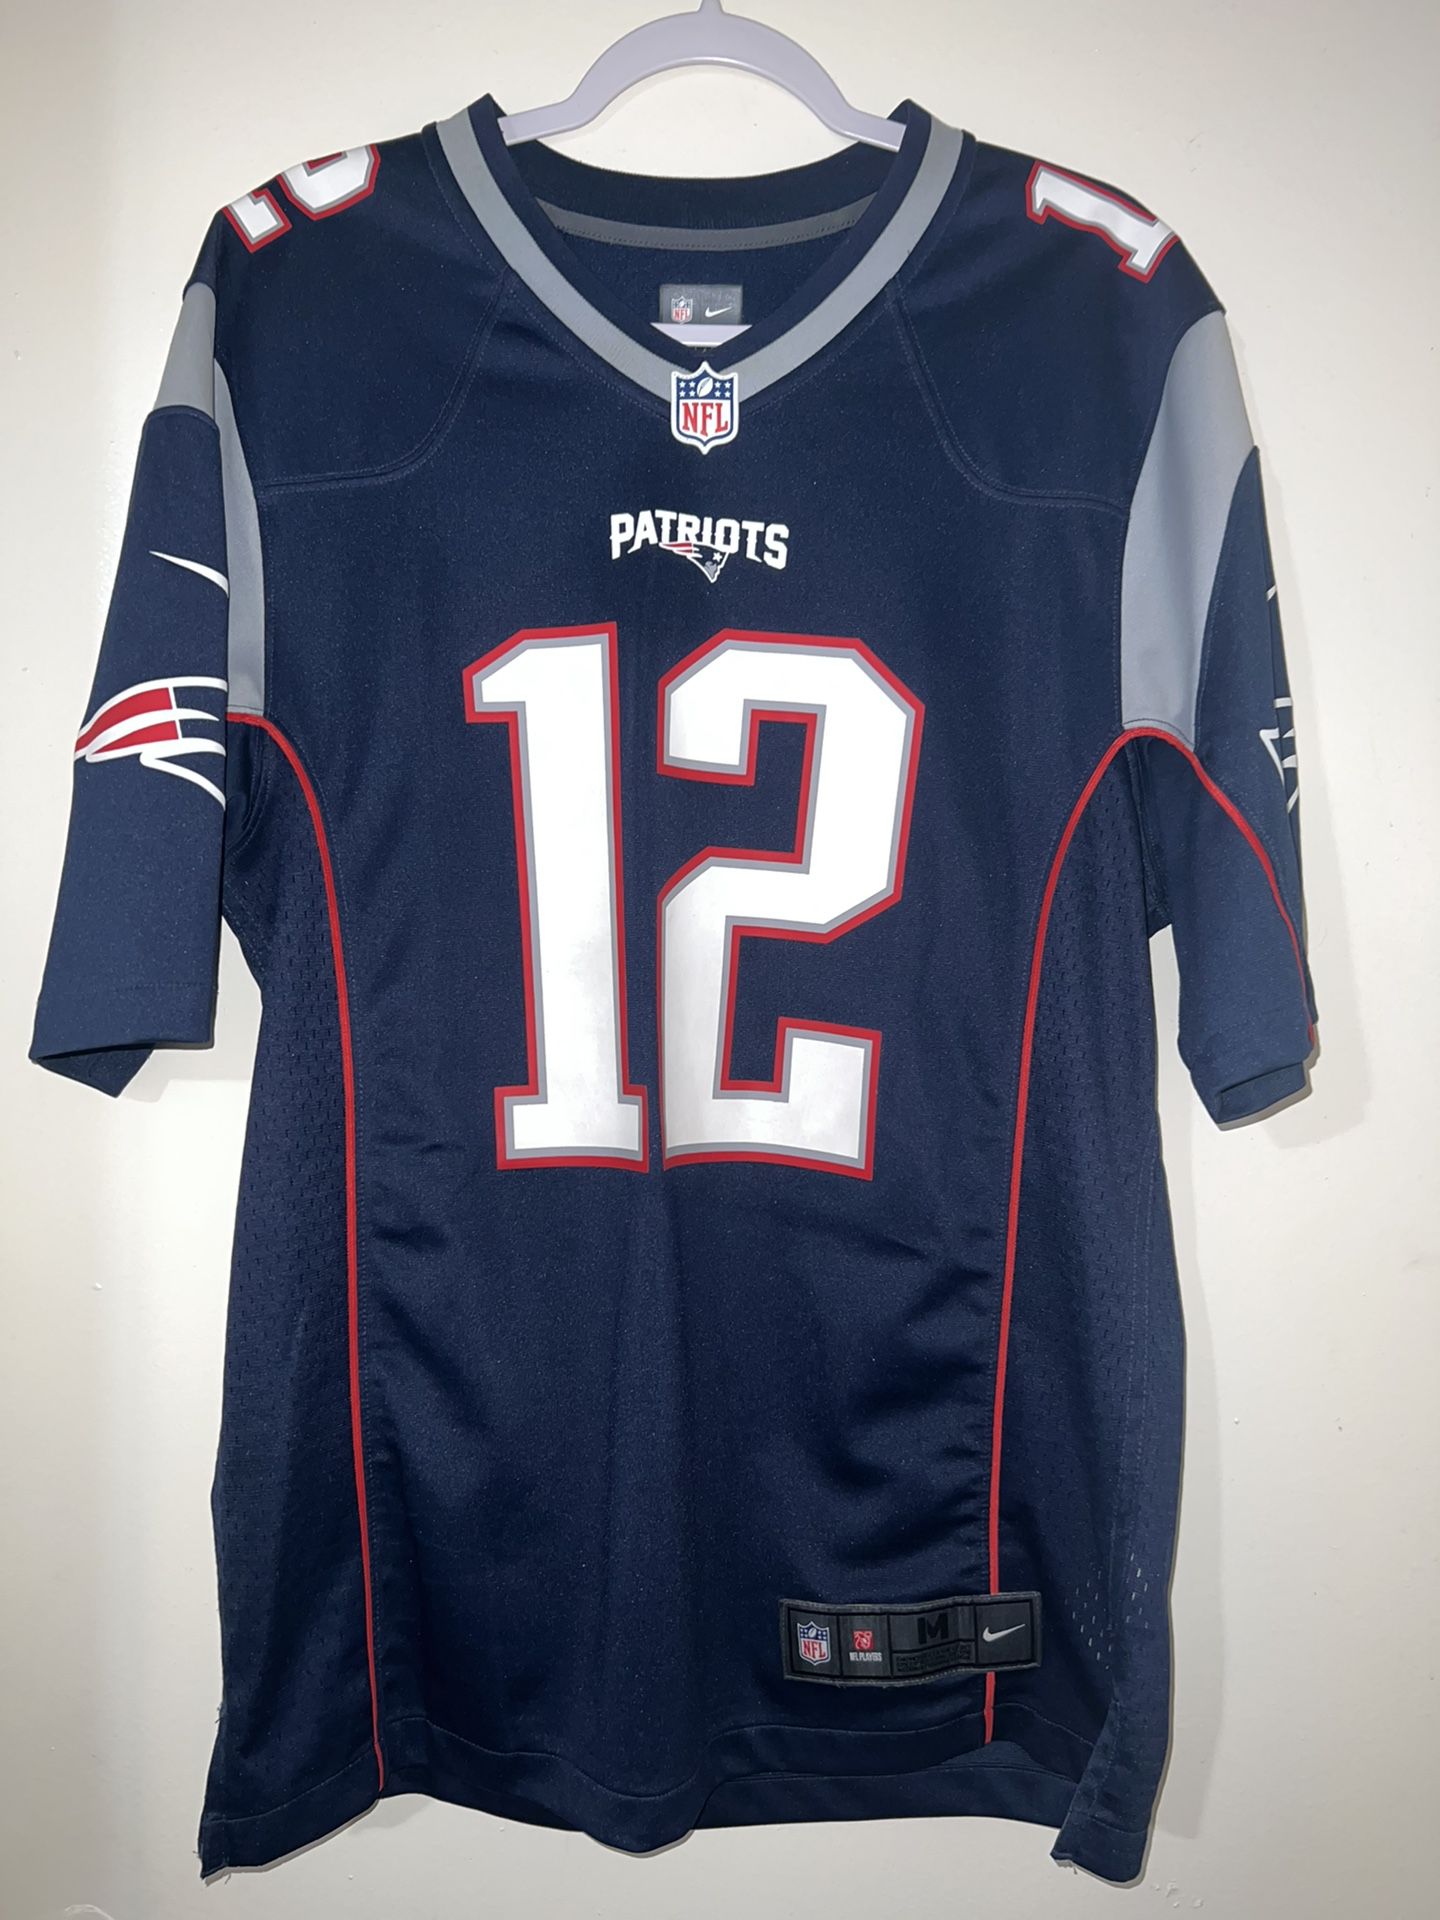 Patriots Jersey - Tom Brady 